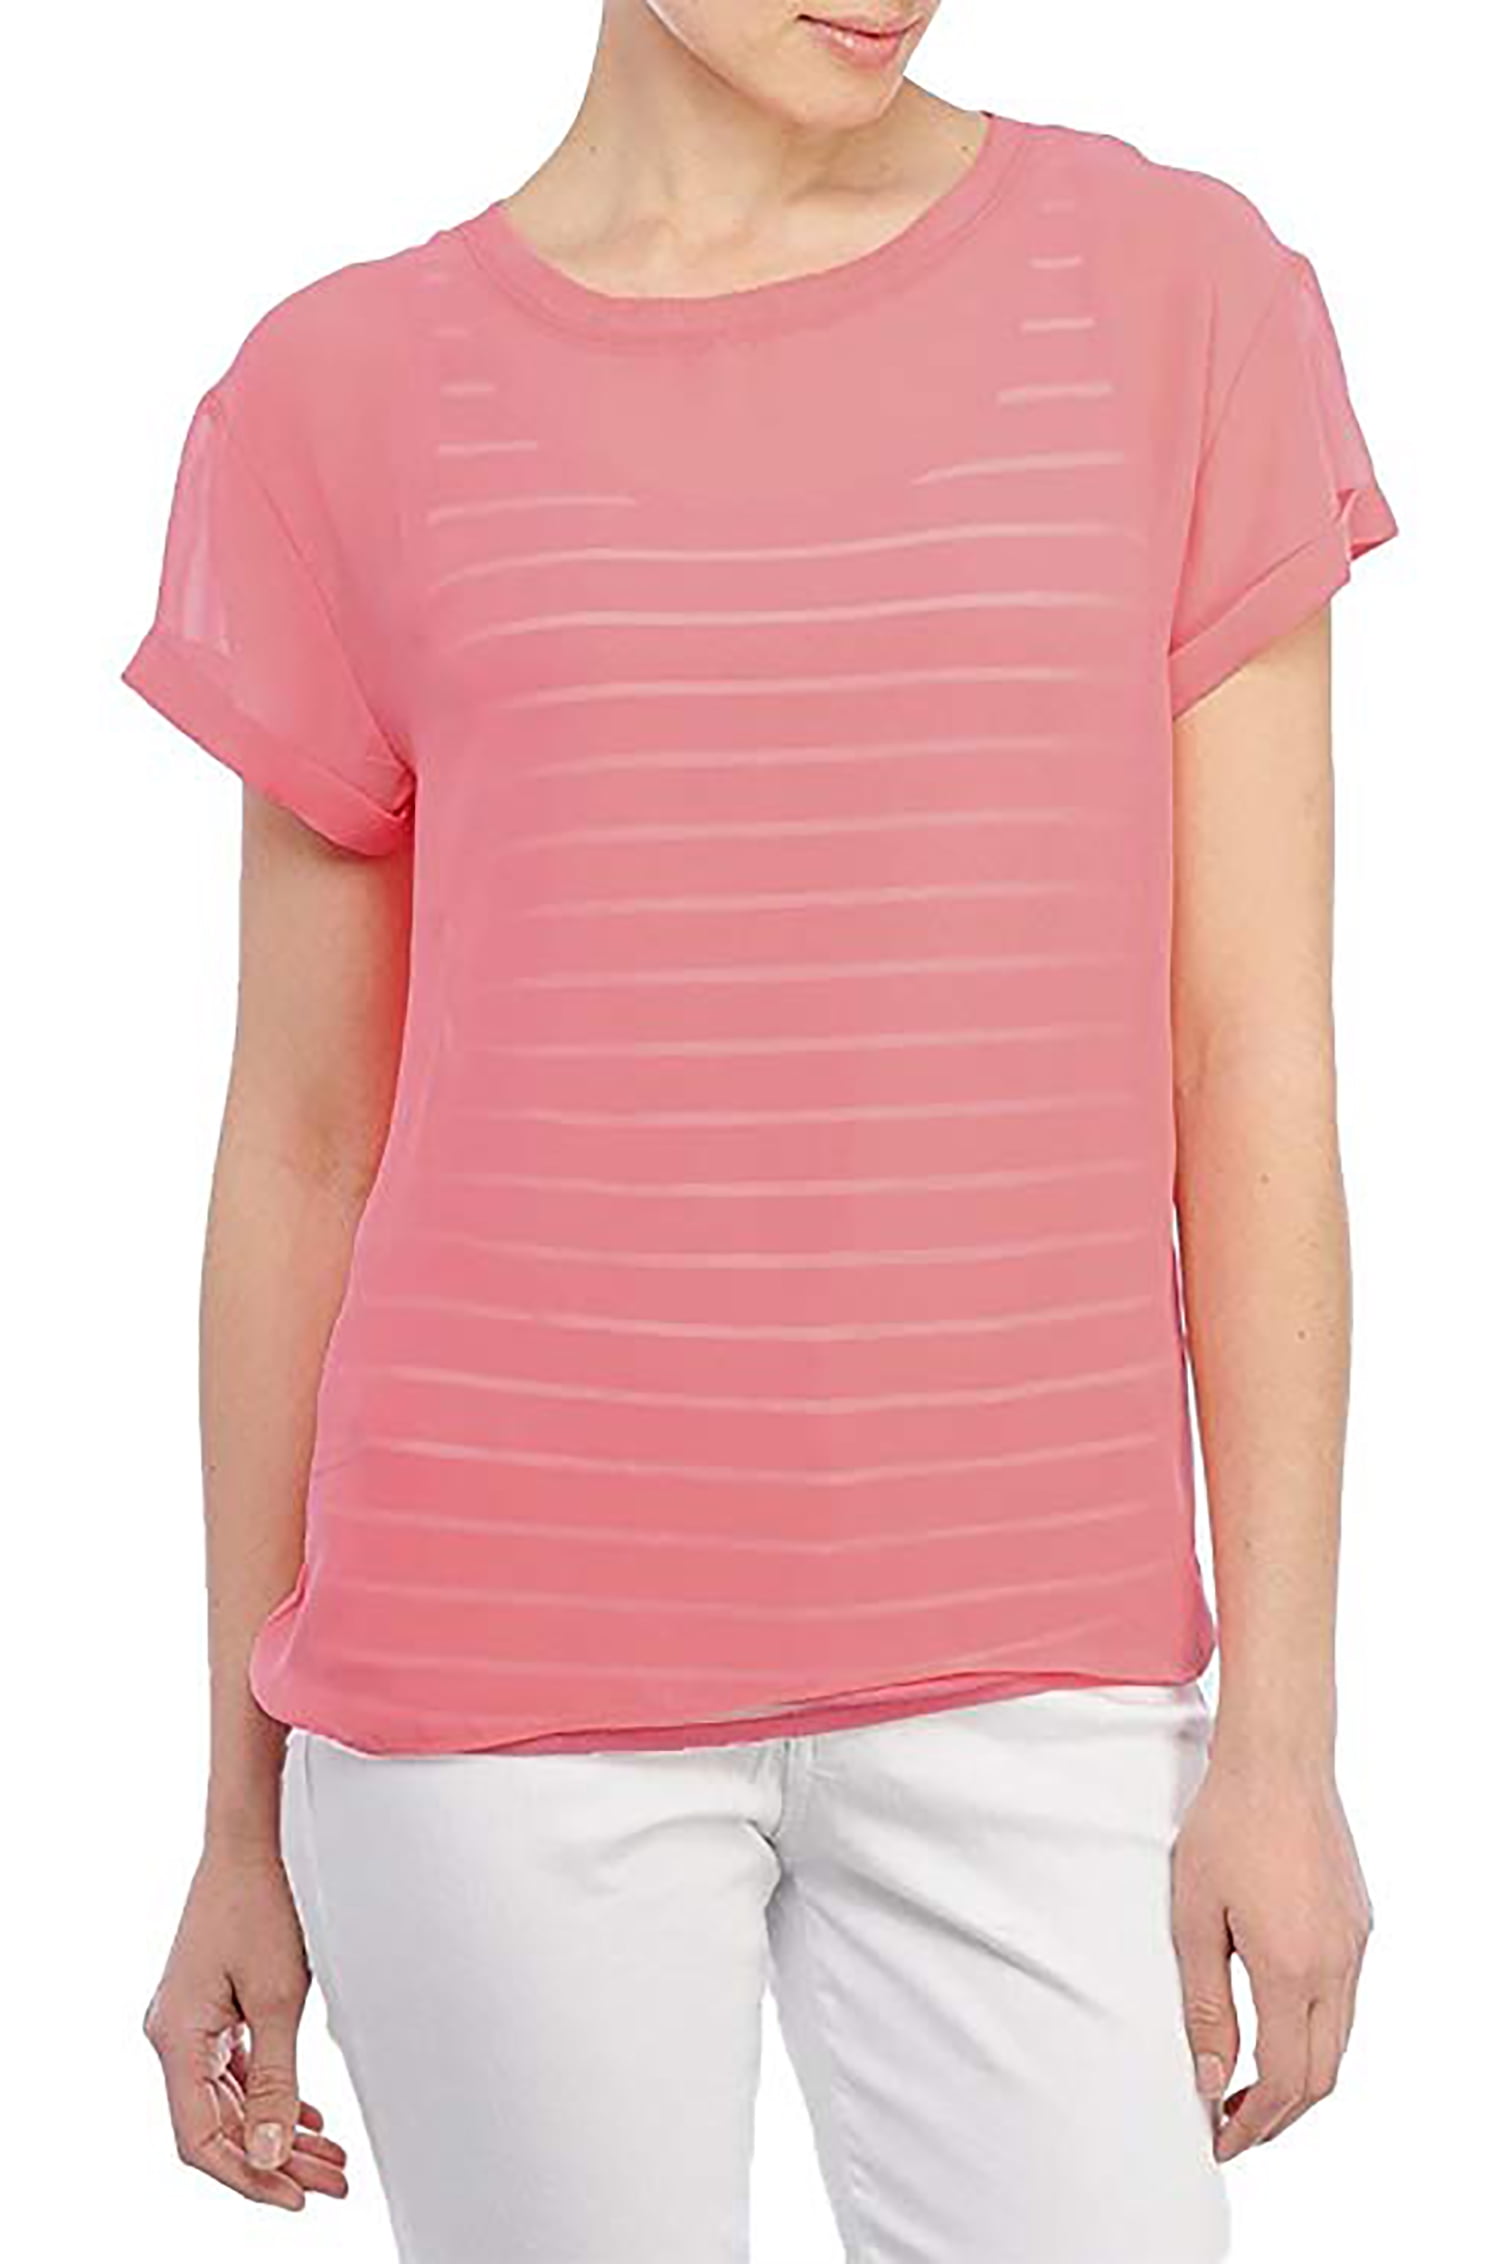 NYDJ - Nydj Womens Shirt Chiffon Overlay Striped Casual Top Pink Small ...